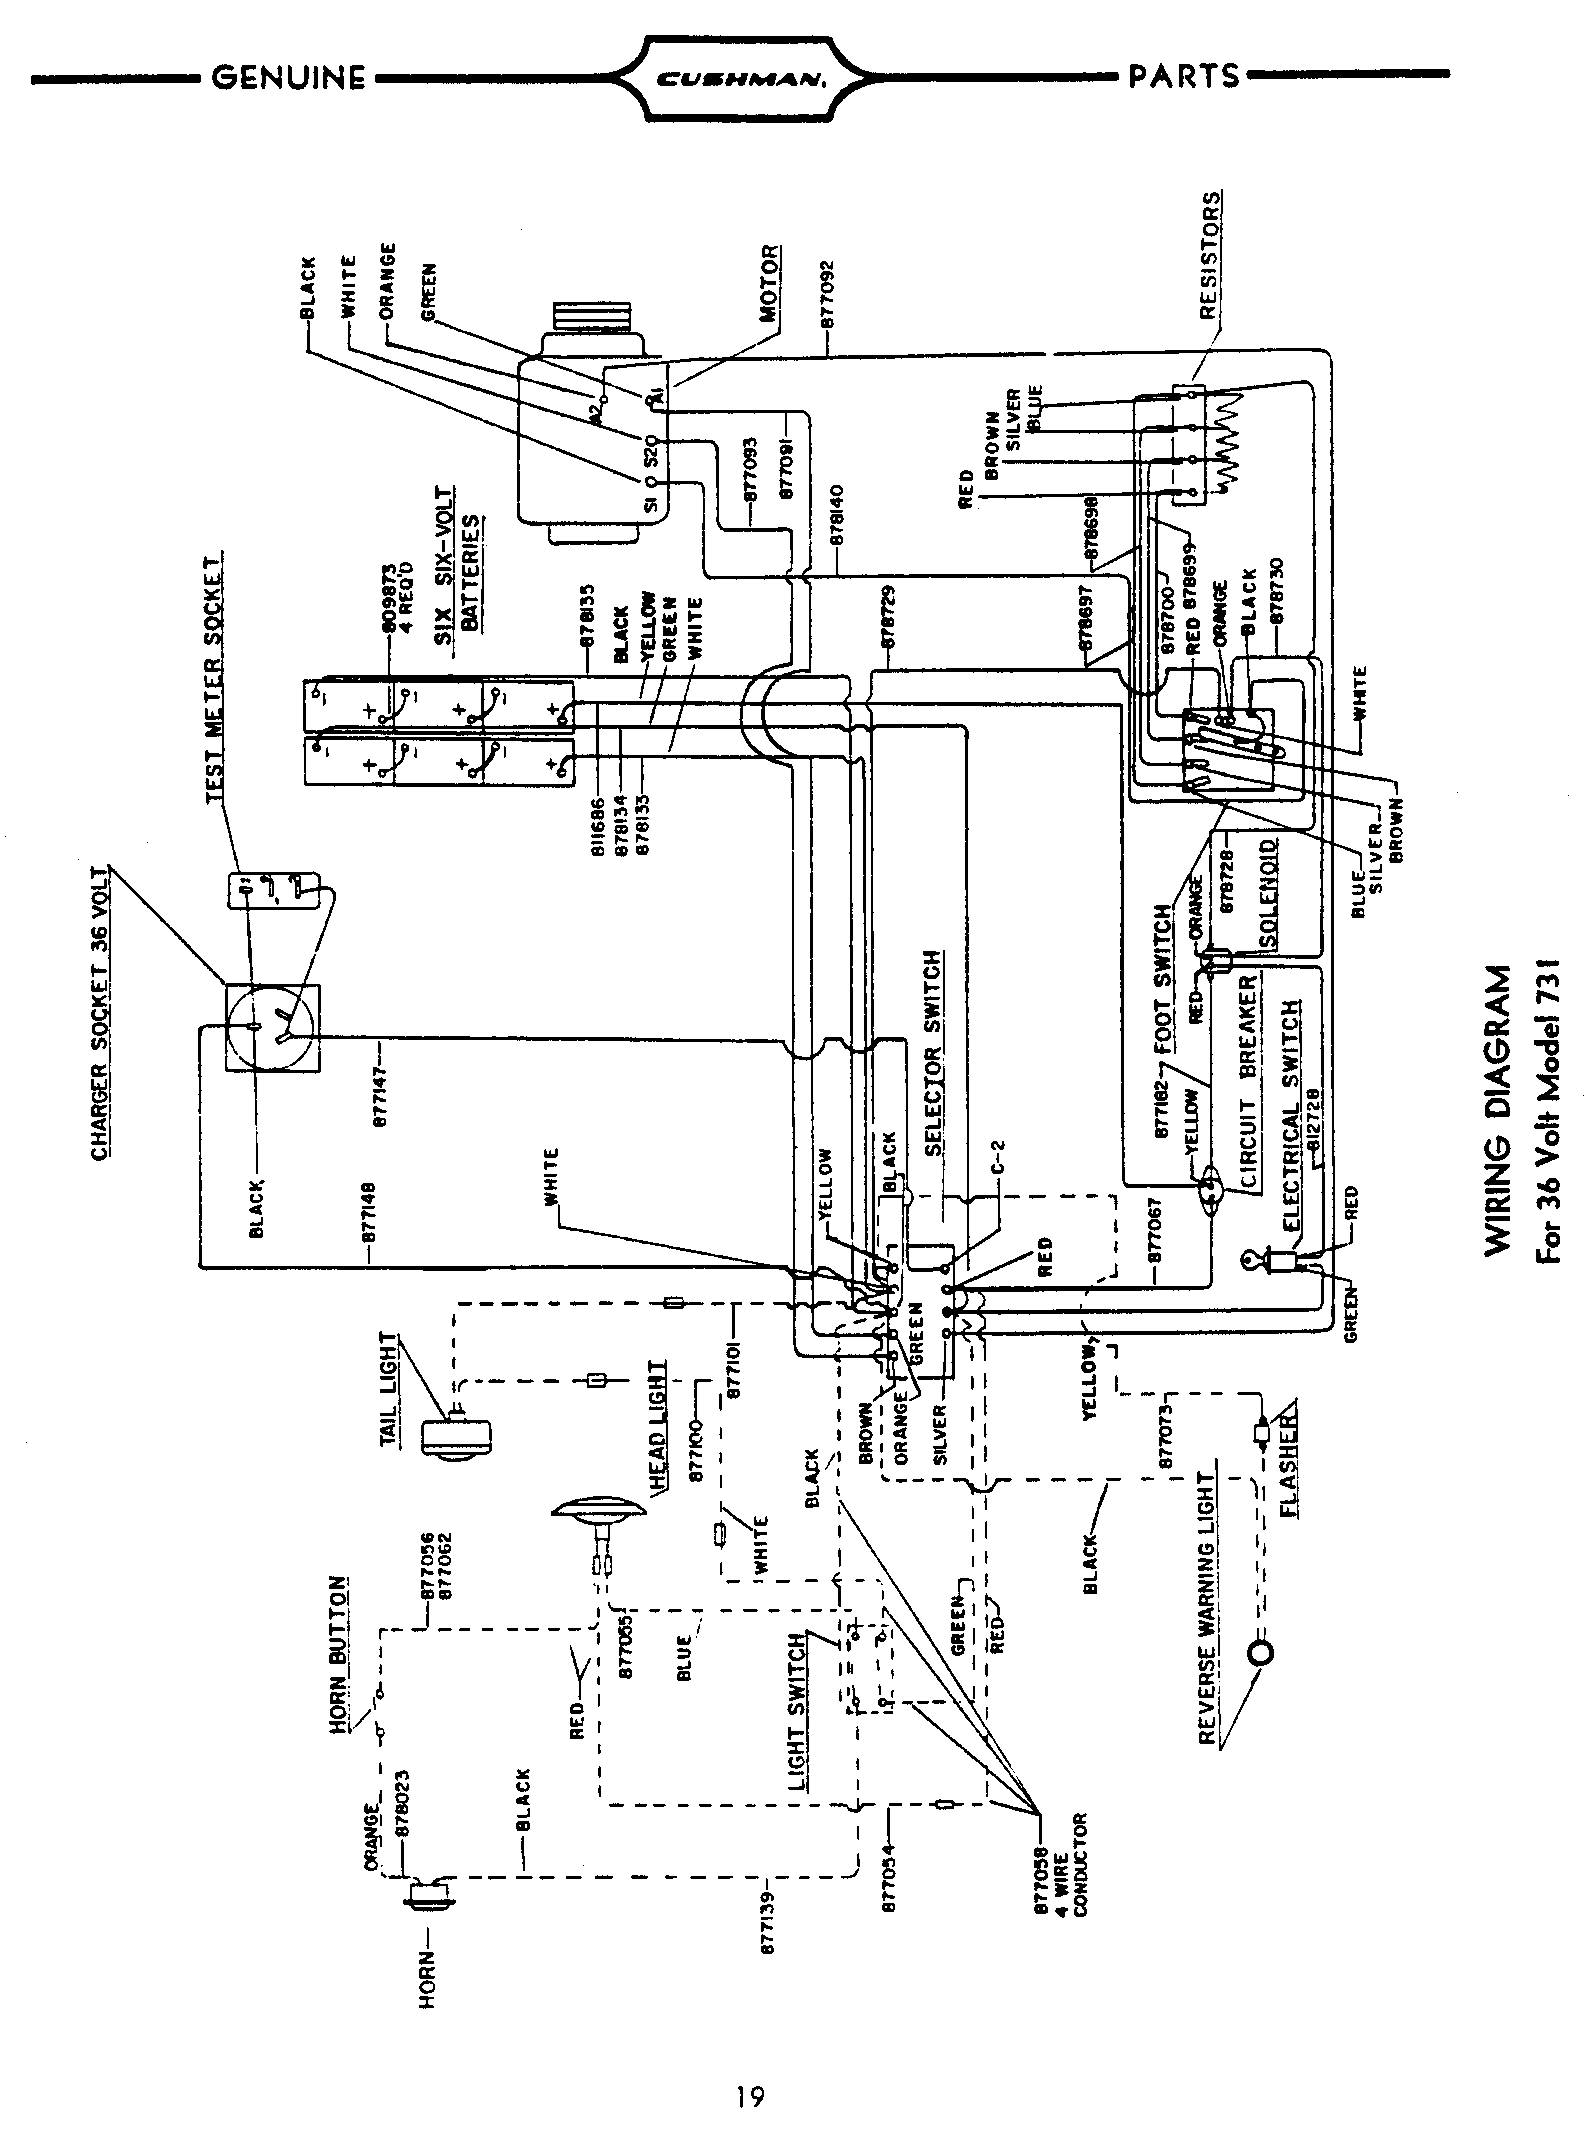 wiring diagram for cushman 898570a